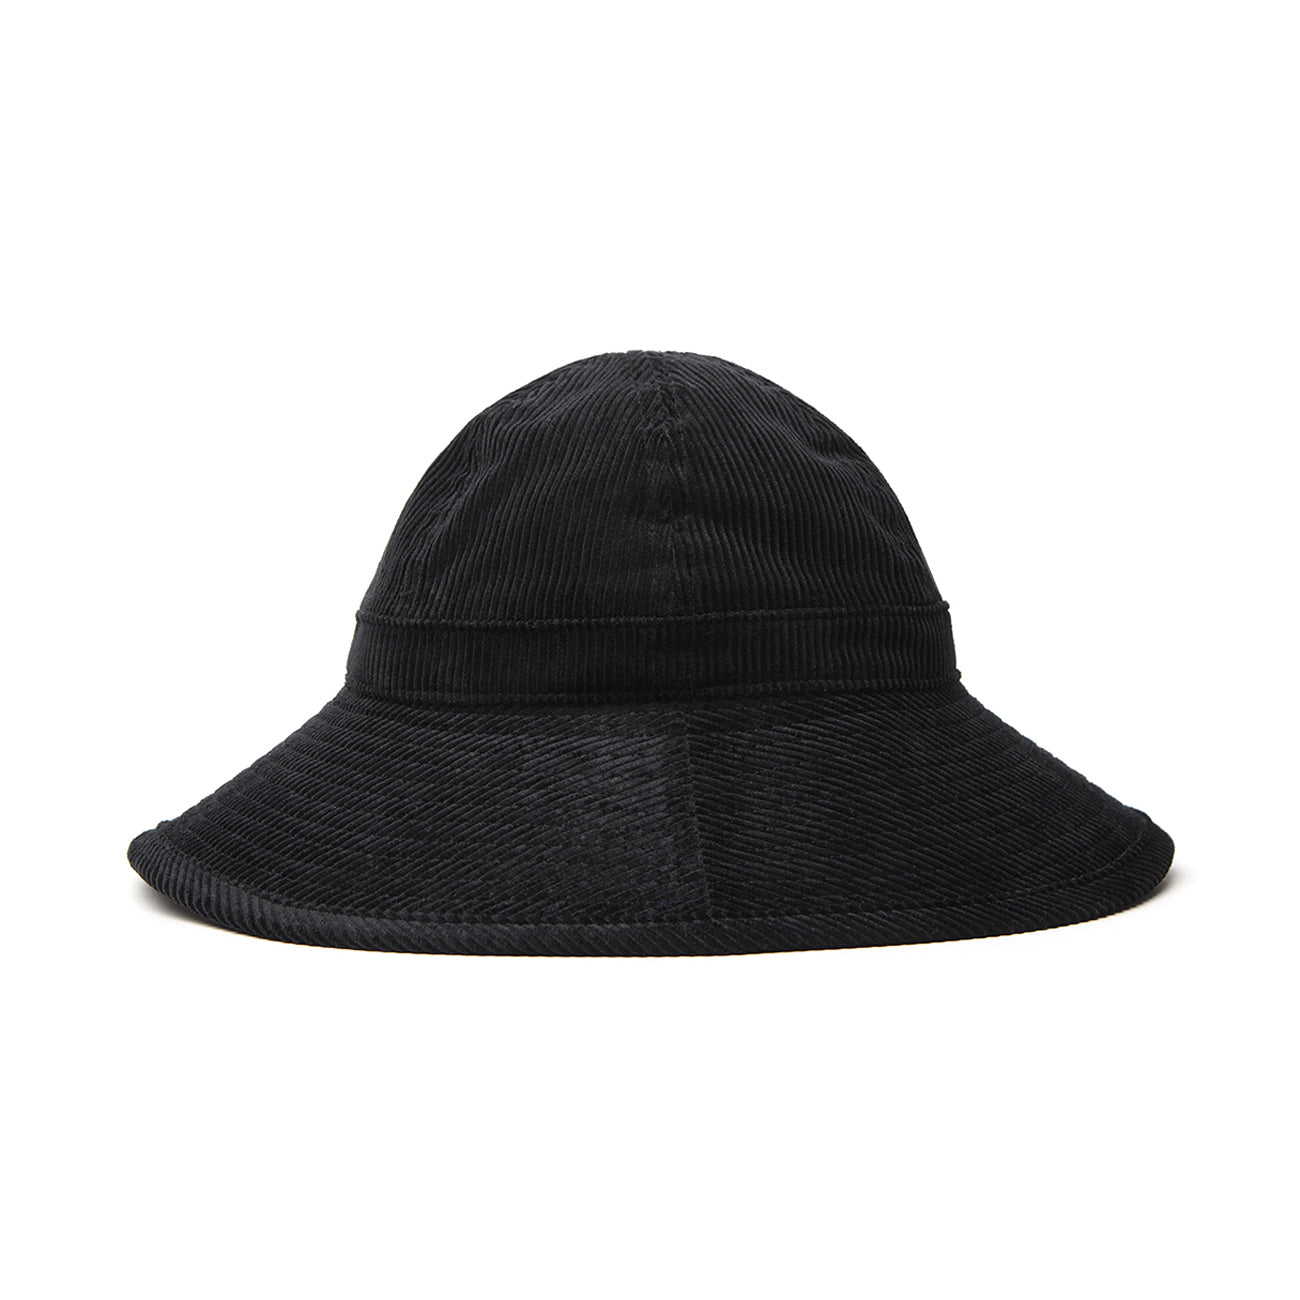 BIG HAT (CORDUROY) - BLACK